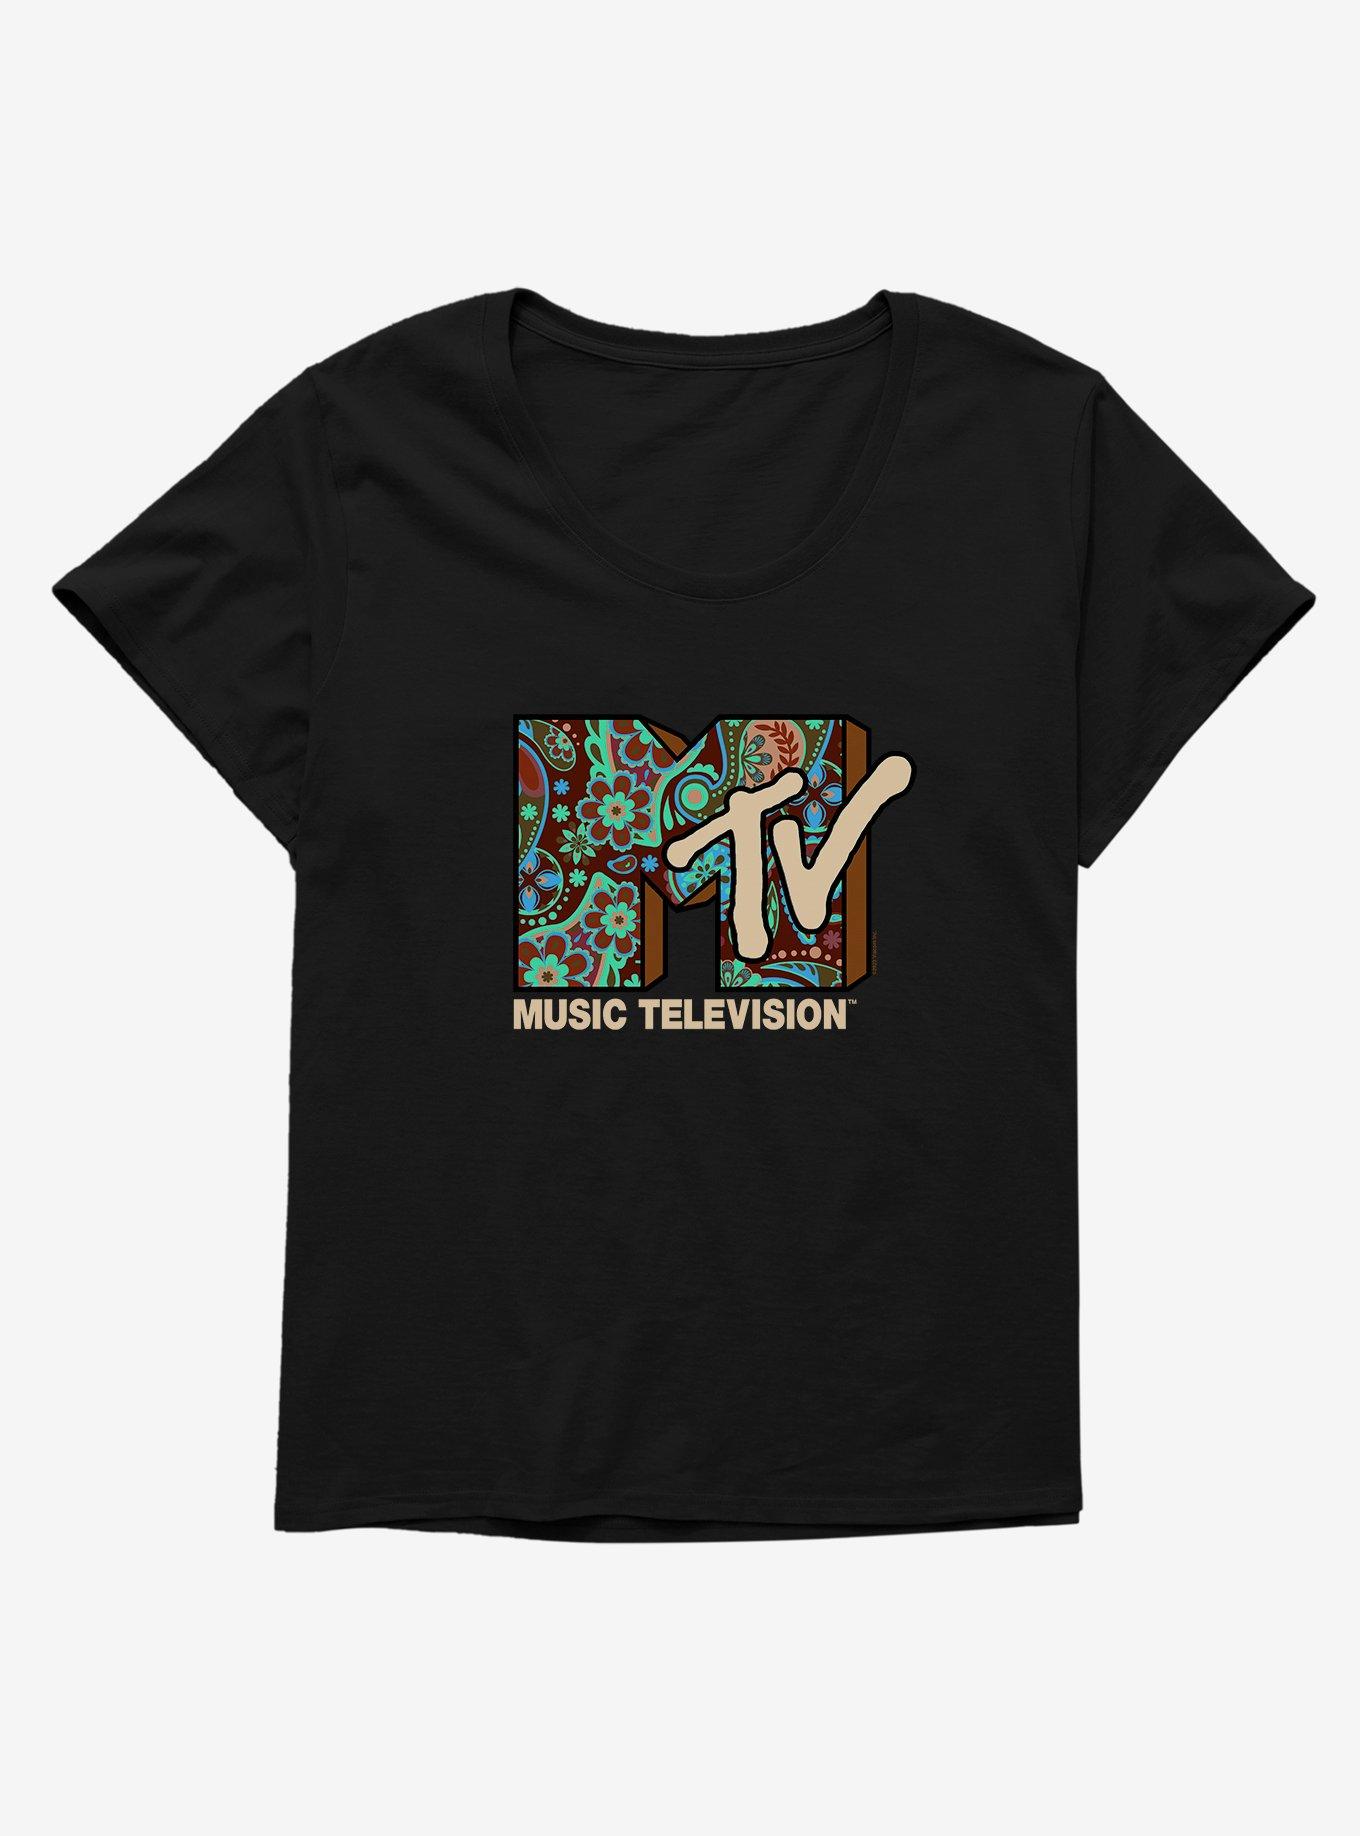 MTV Paisley Logo Girls T-Shirt Plus